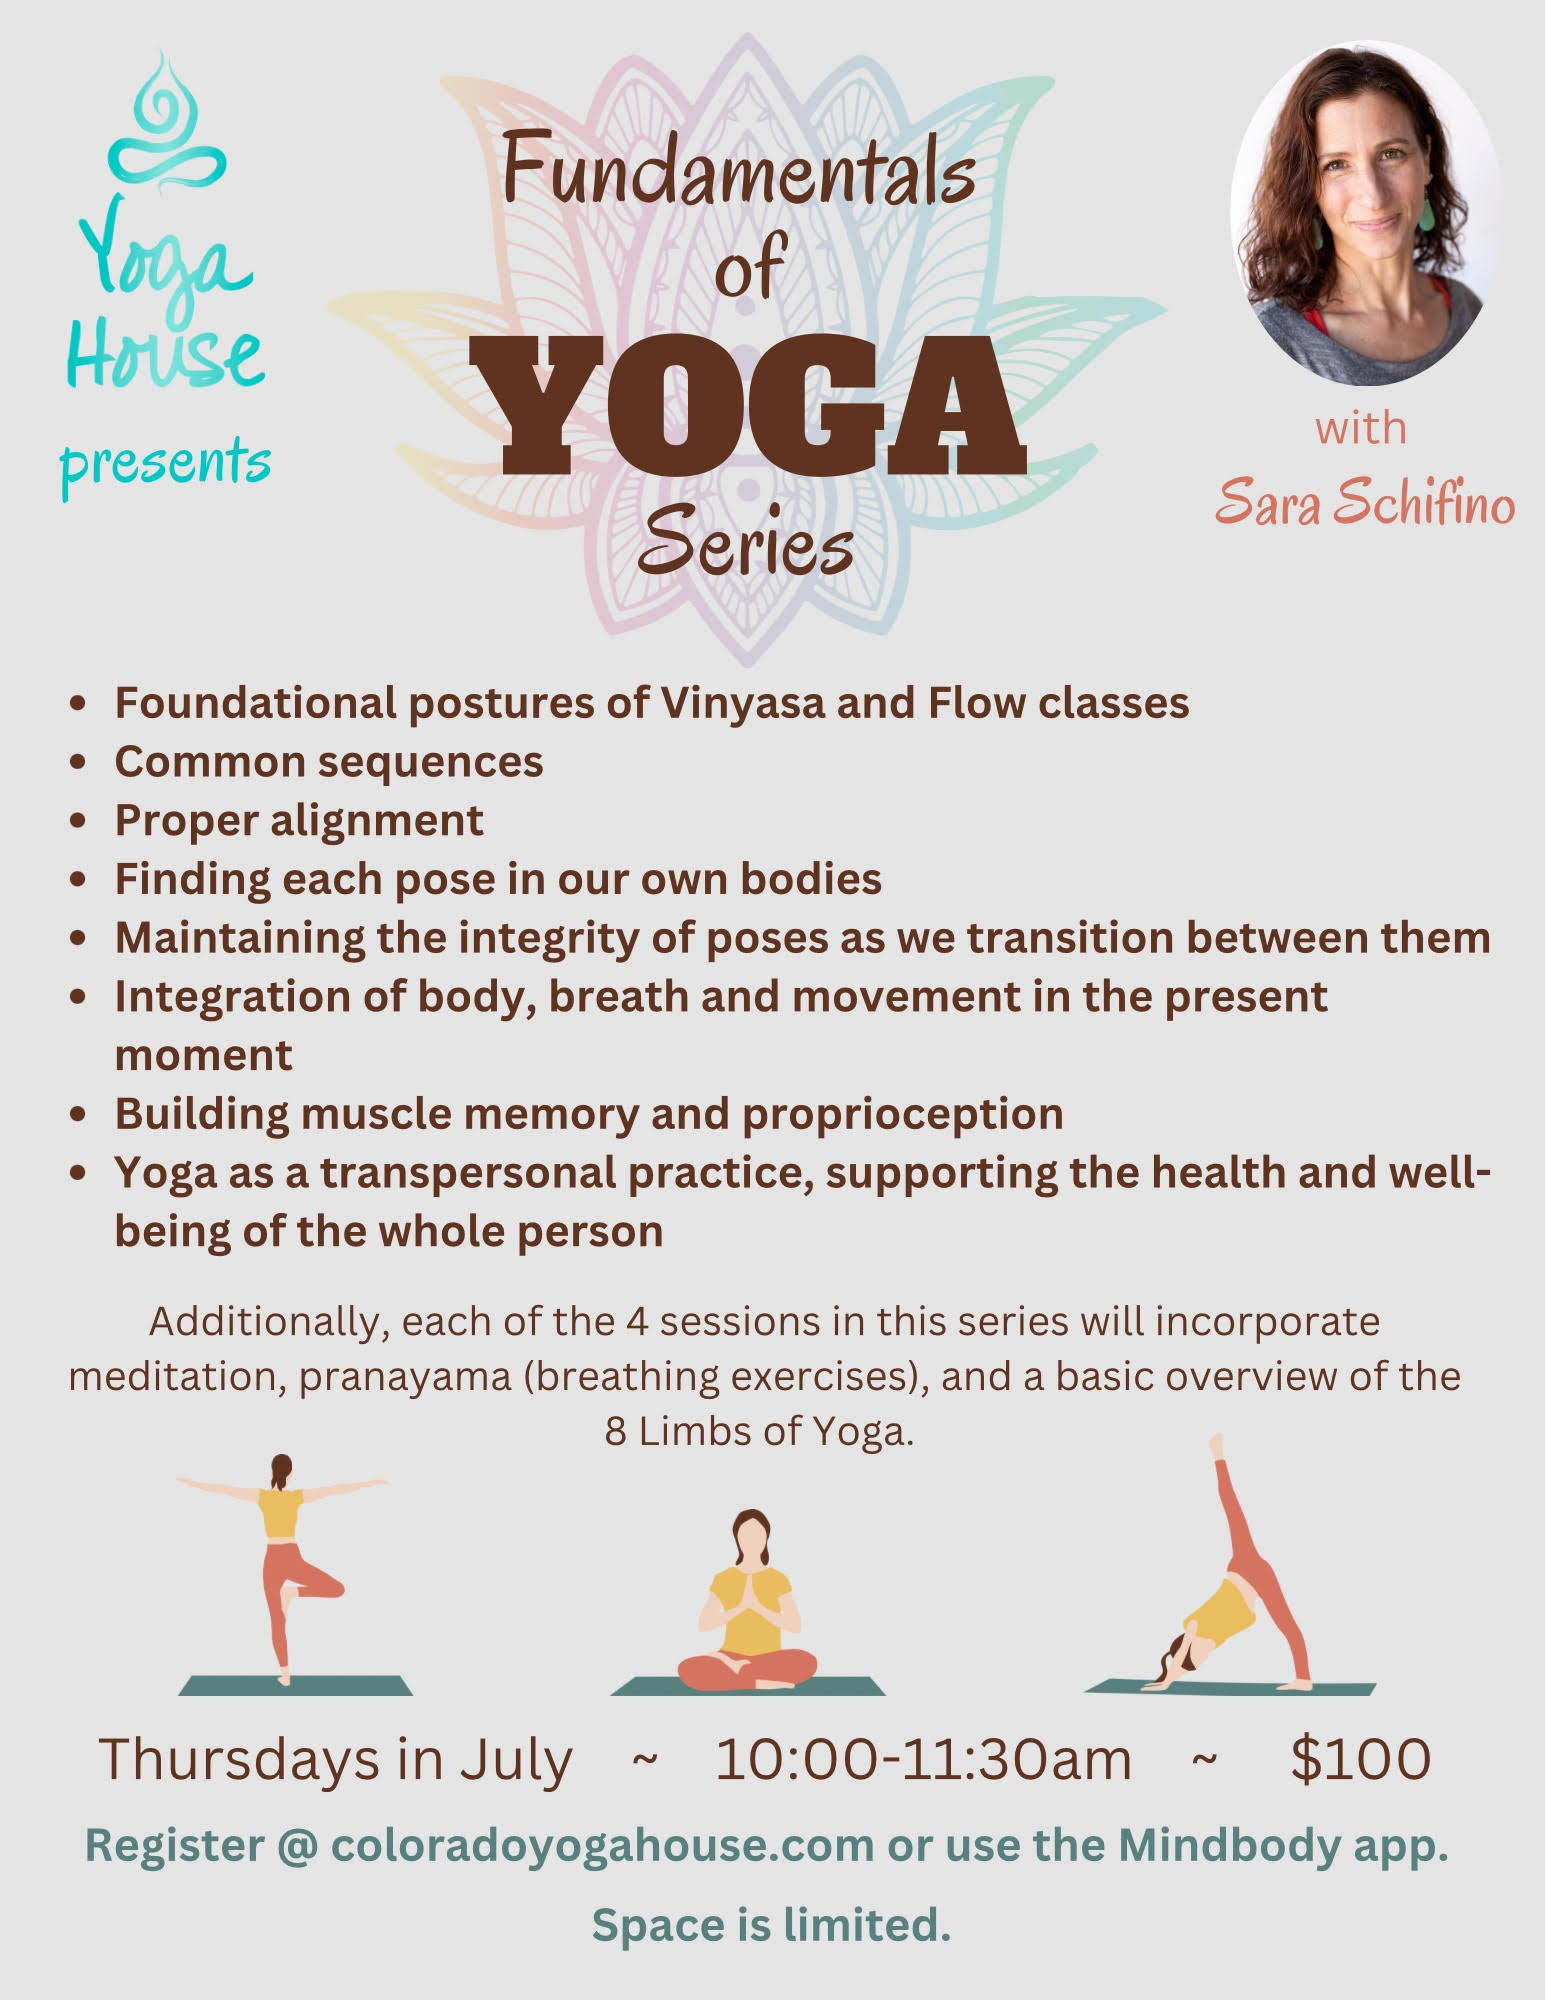 Hatha Yoga Vs Vinyasa: Uncovering The Asanas, Benefits & Basics Of